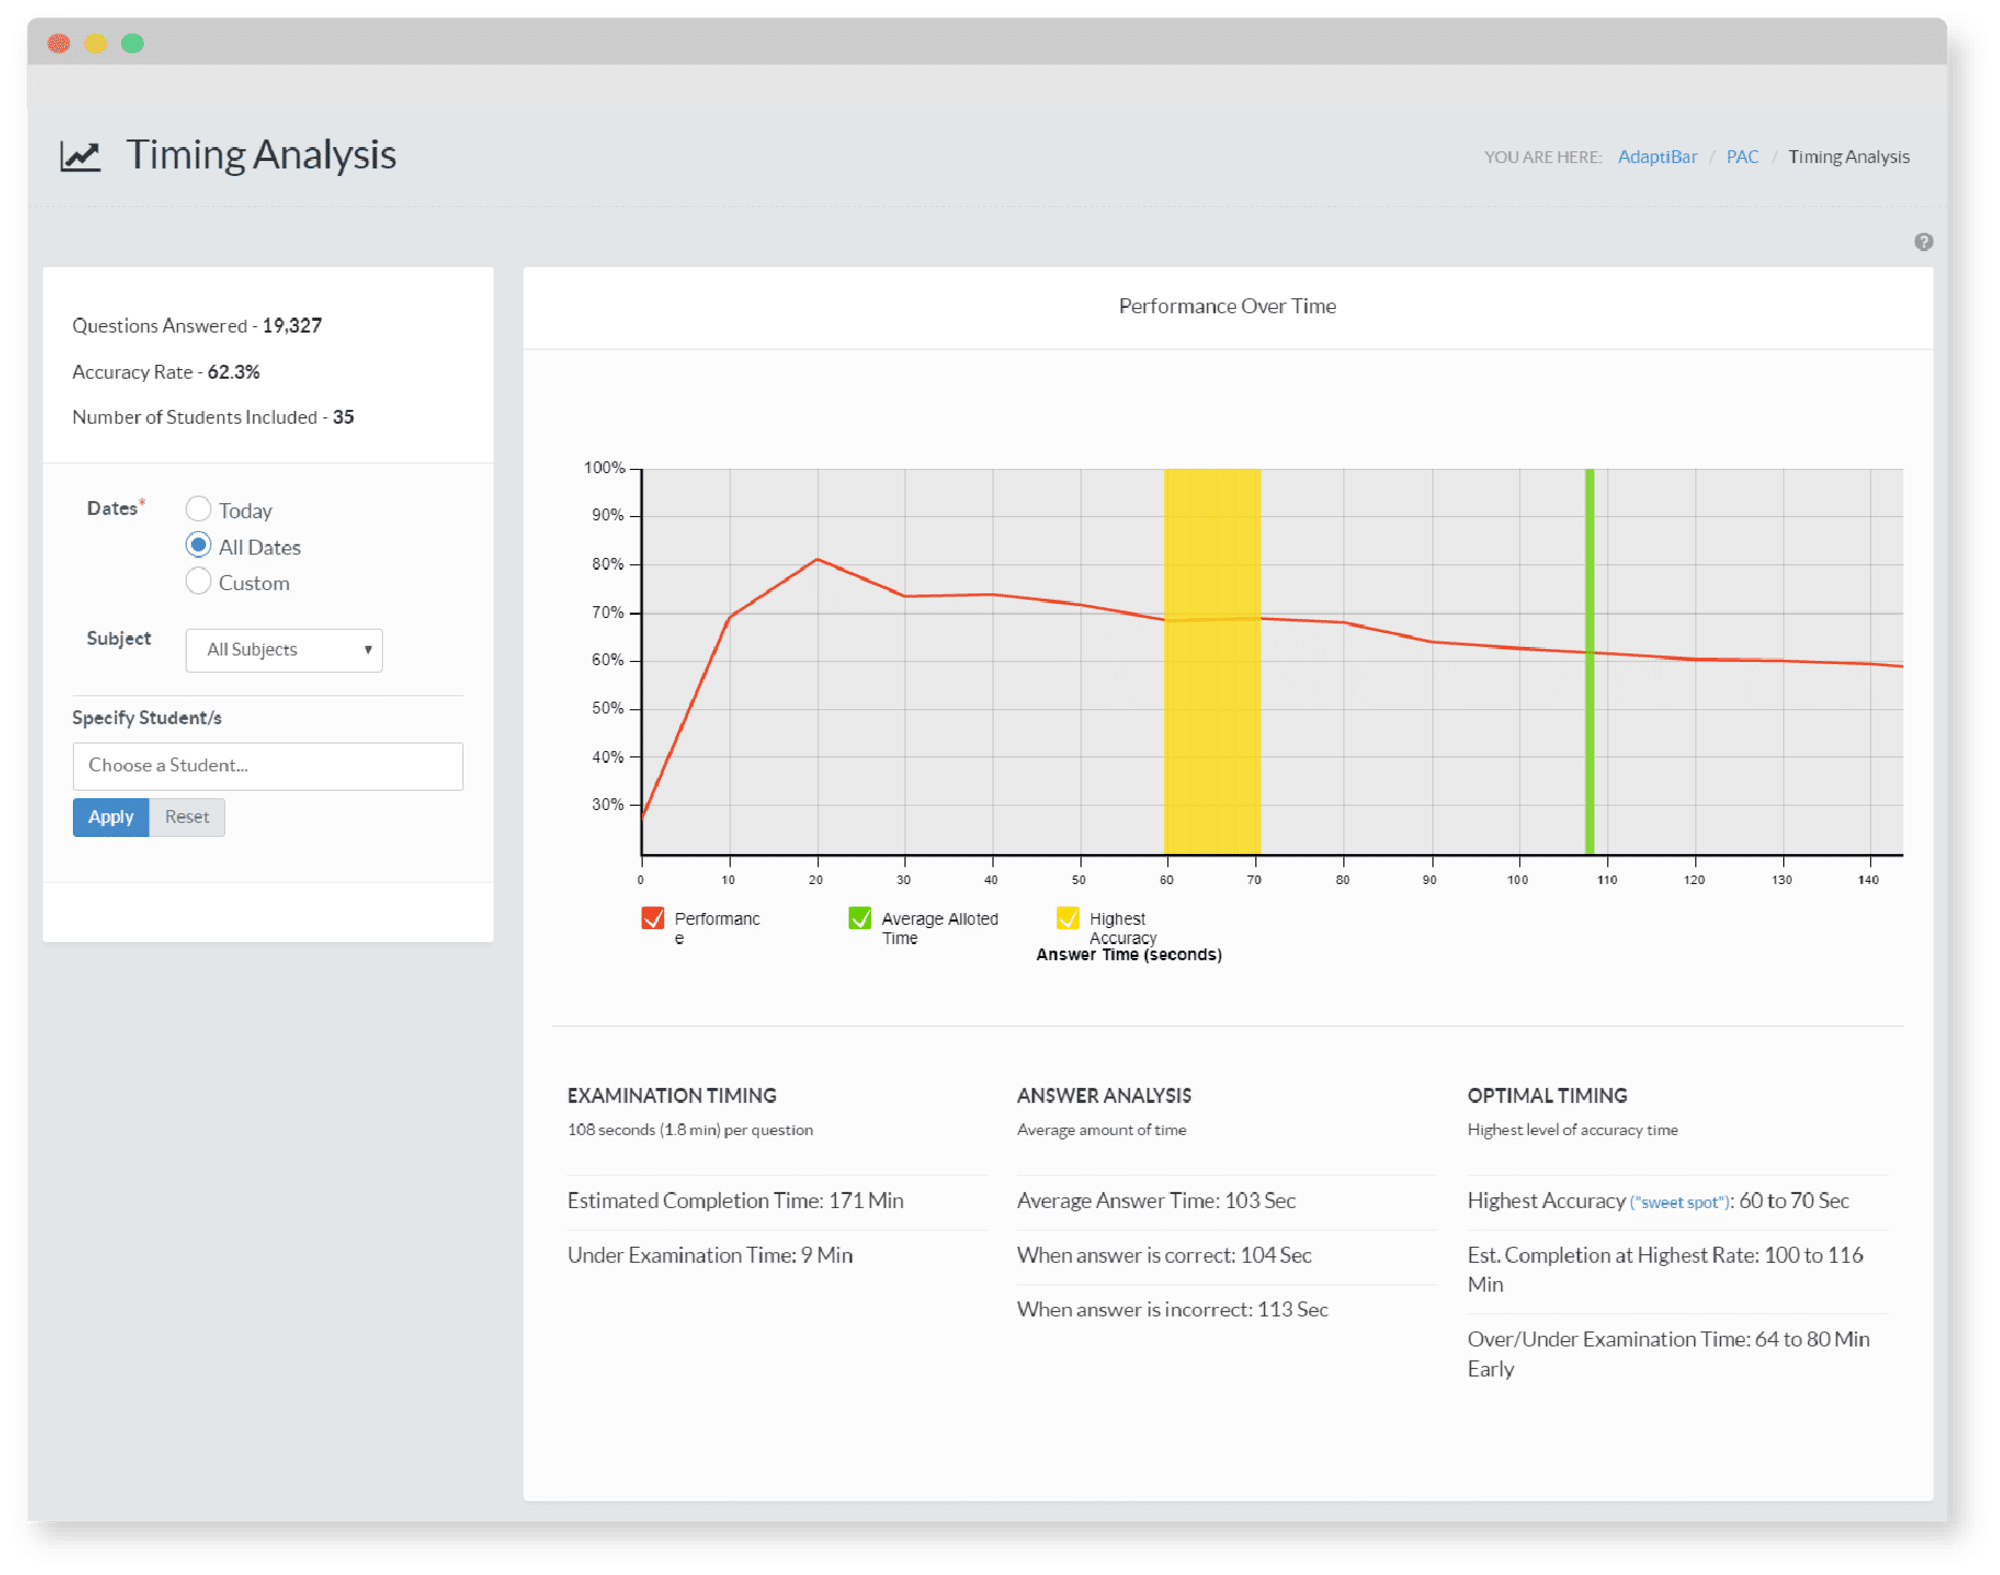 Adaptibar's timing analysis graph